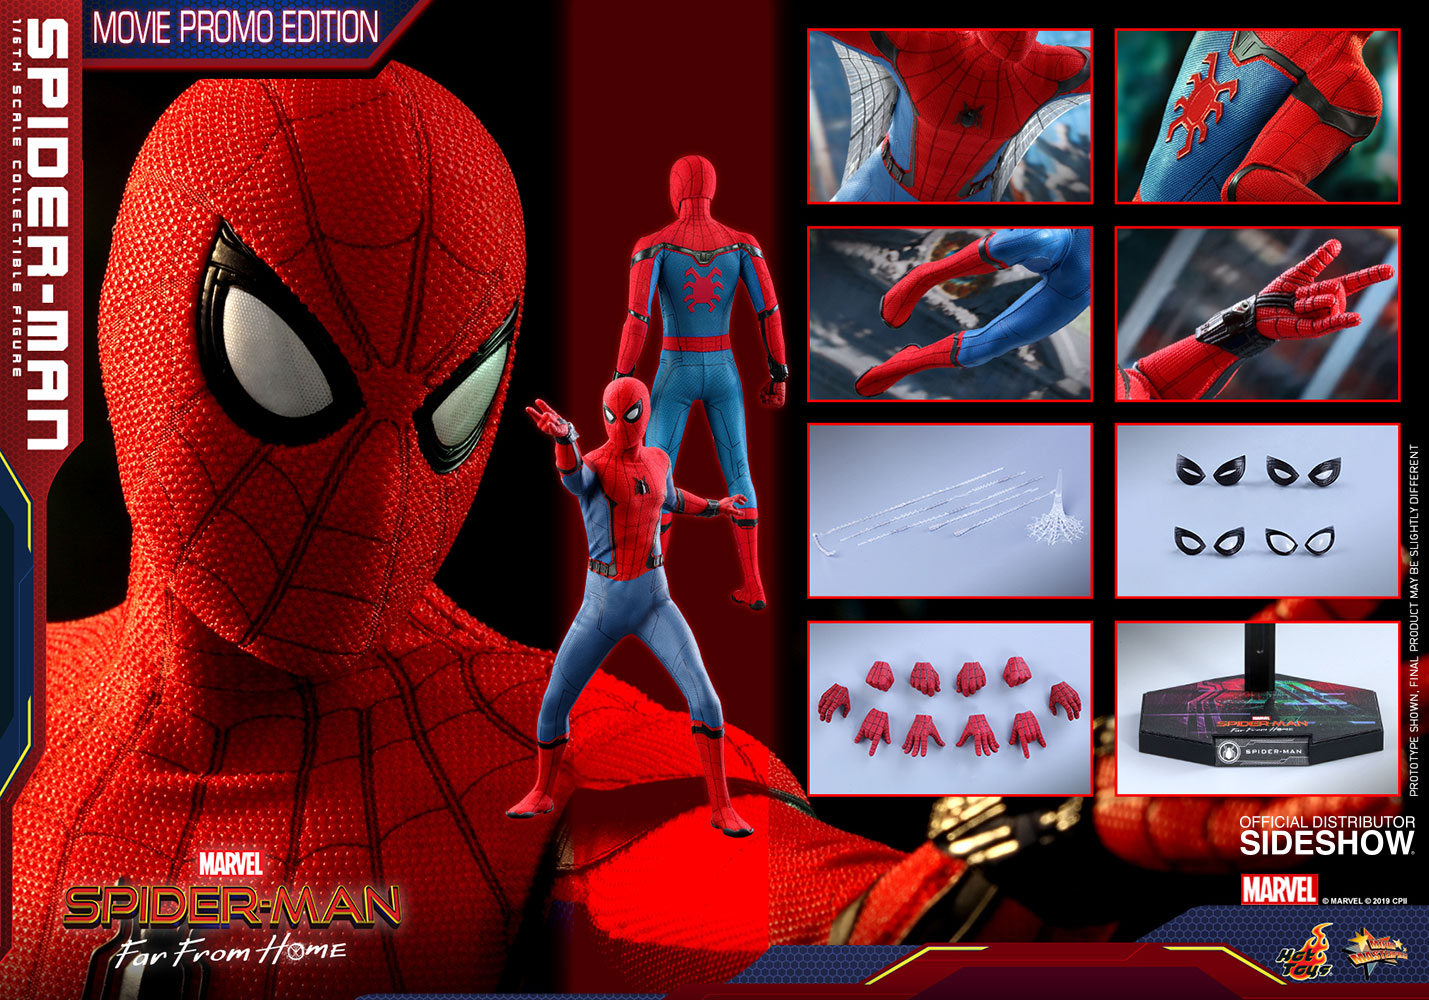 spider-man-movie-promo-edition_marvel_gallery_5cf805002e216.jpg